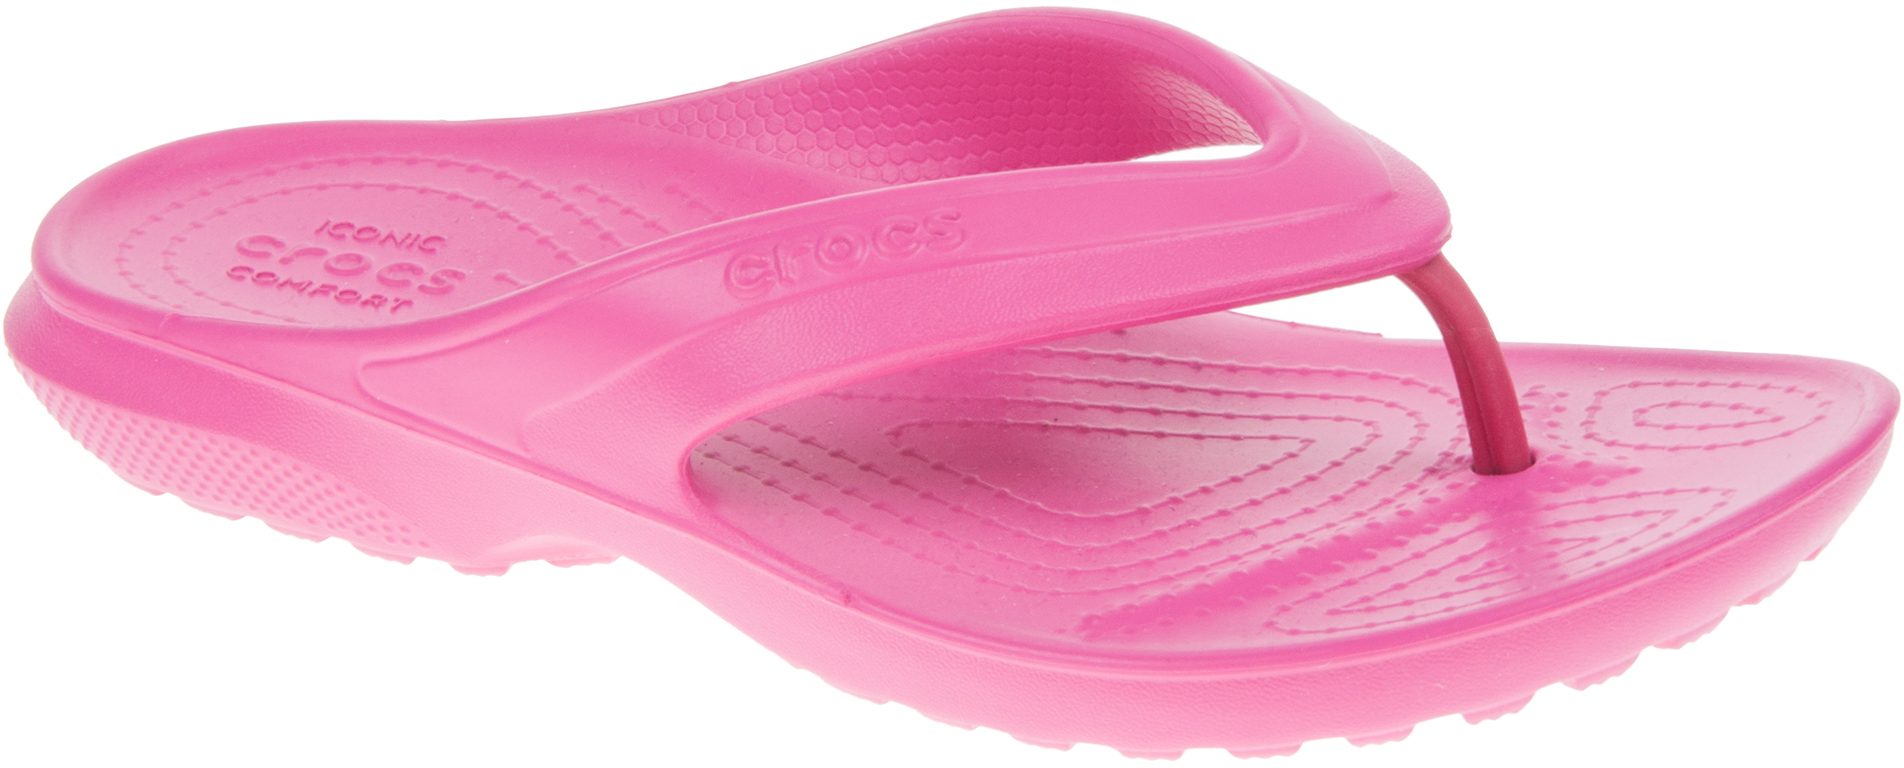 Crocs Kids Classic Flip Junior Candy Pink 202871 6X0 - Girls Sandals ...